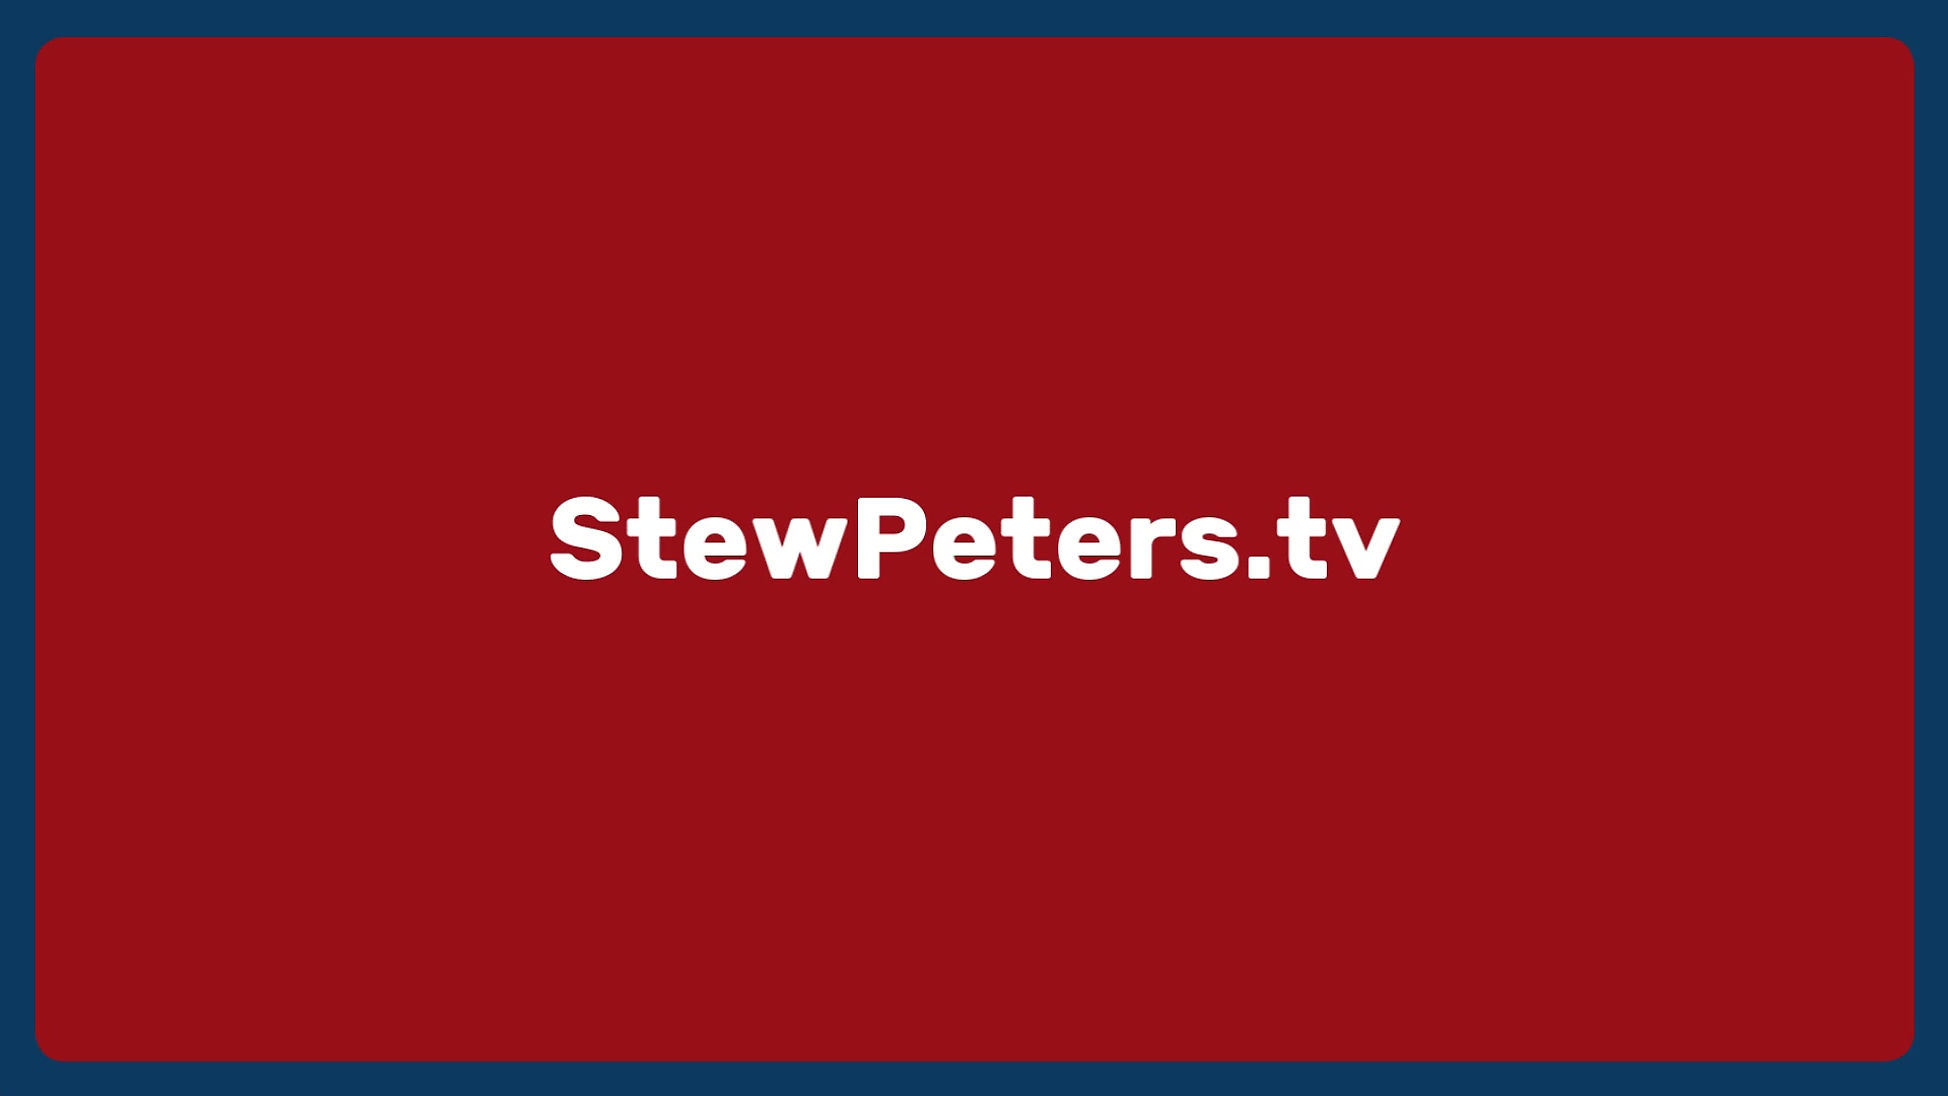 StewPeters.tv